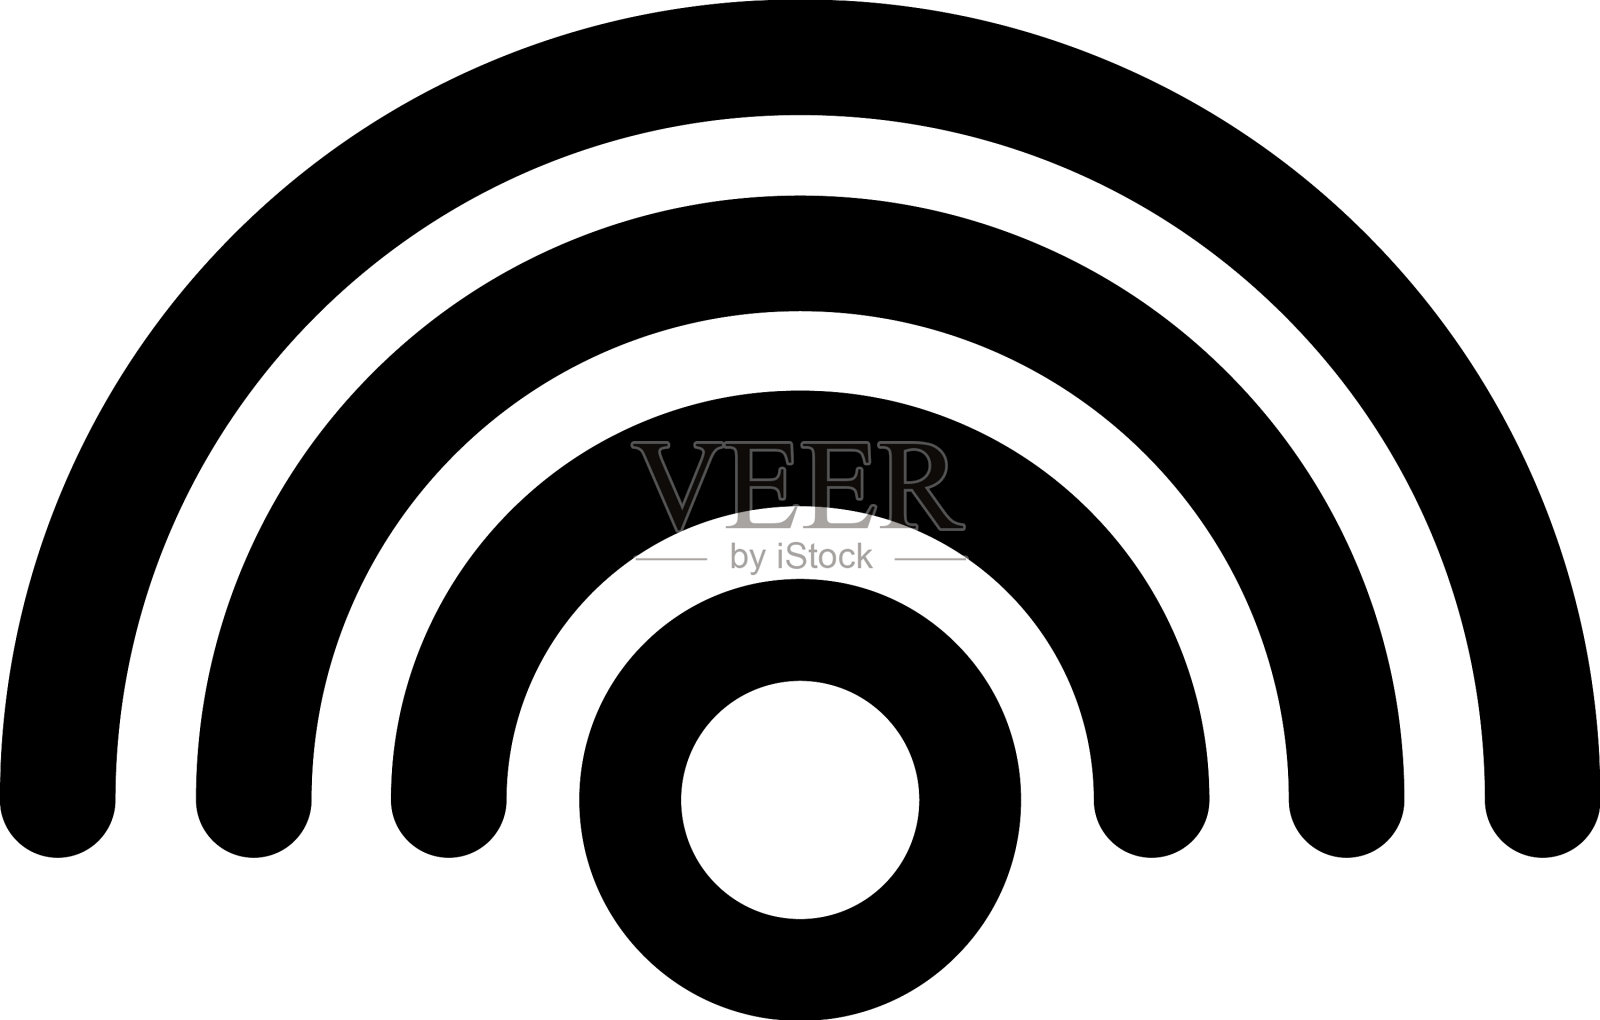 wifi标志图片素材-编号37383153-图行天下